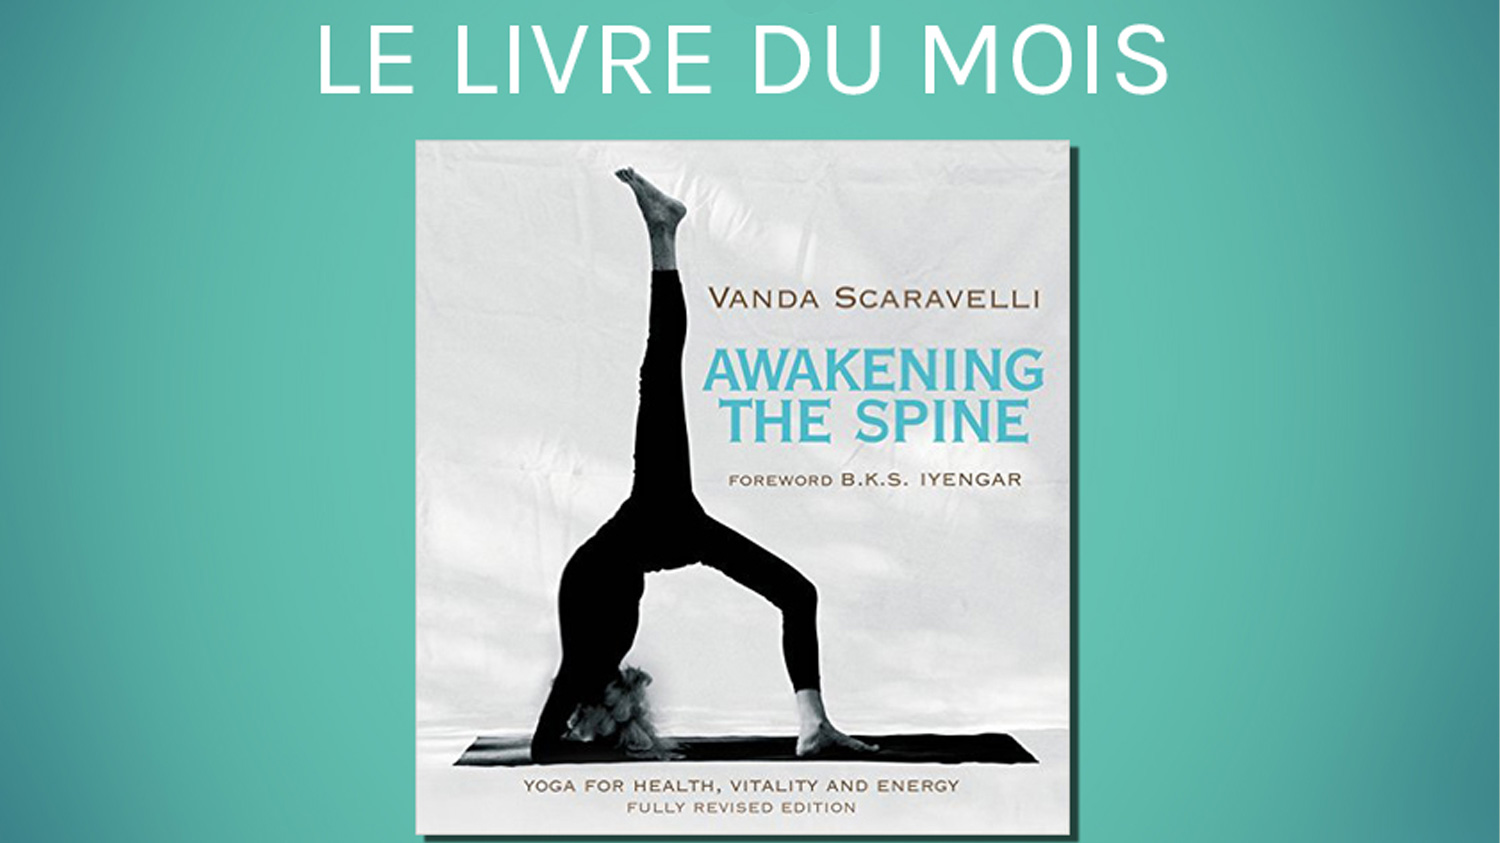 Awakening the spine, Vanda Scaravelli